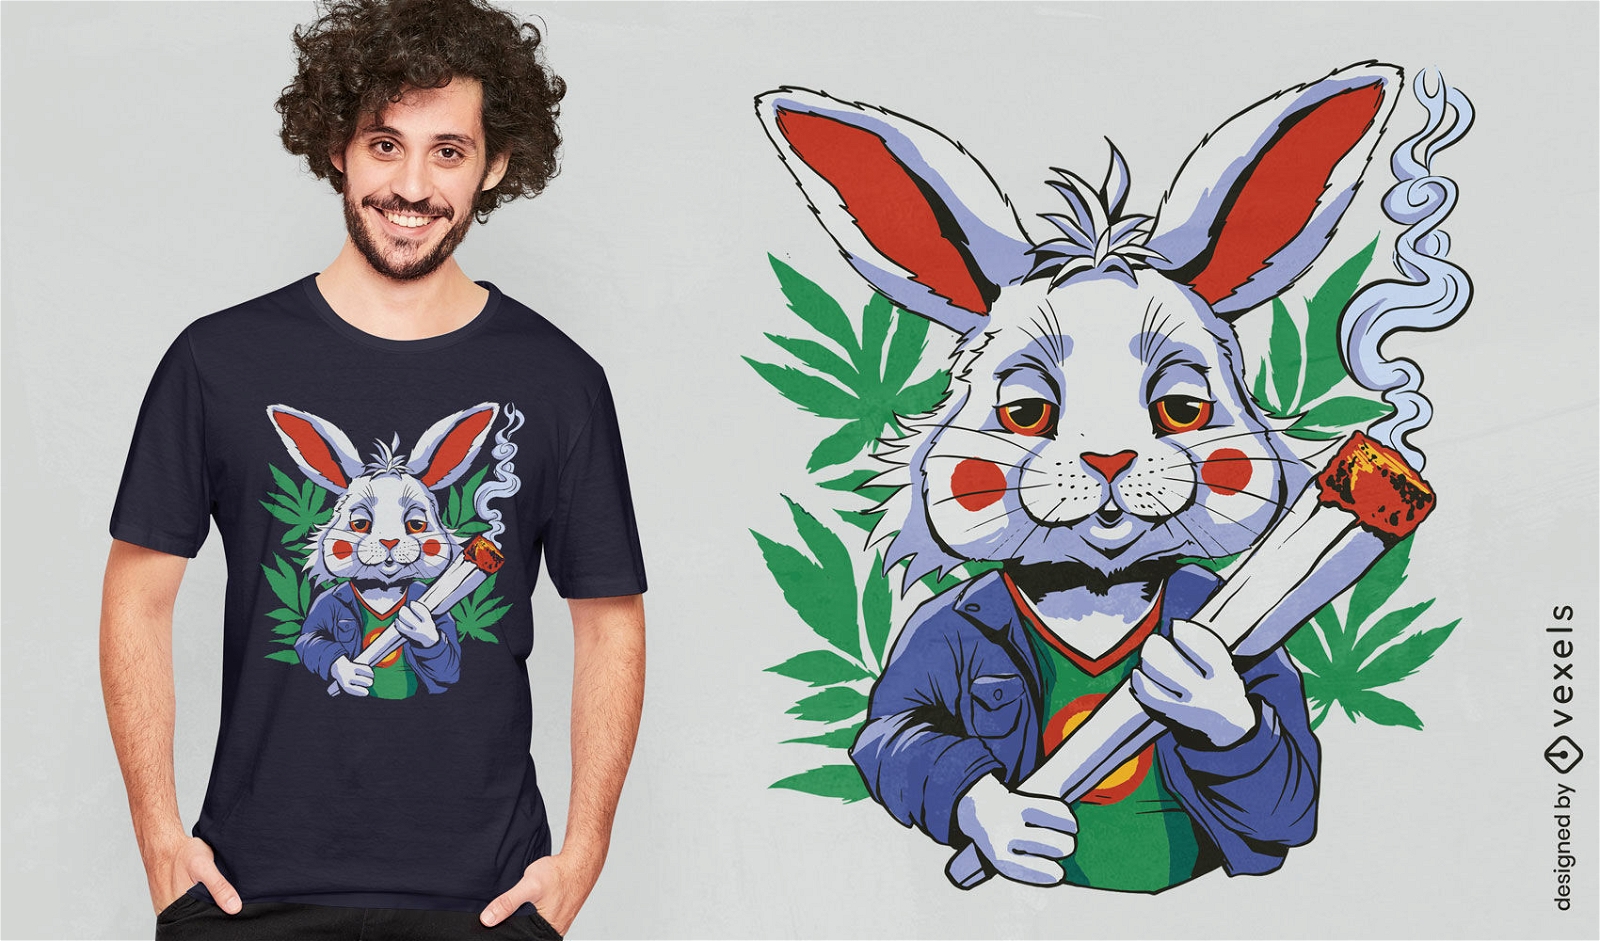 Dise?o de camiseta de conejo funky.